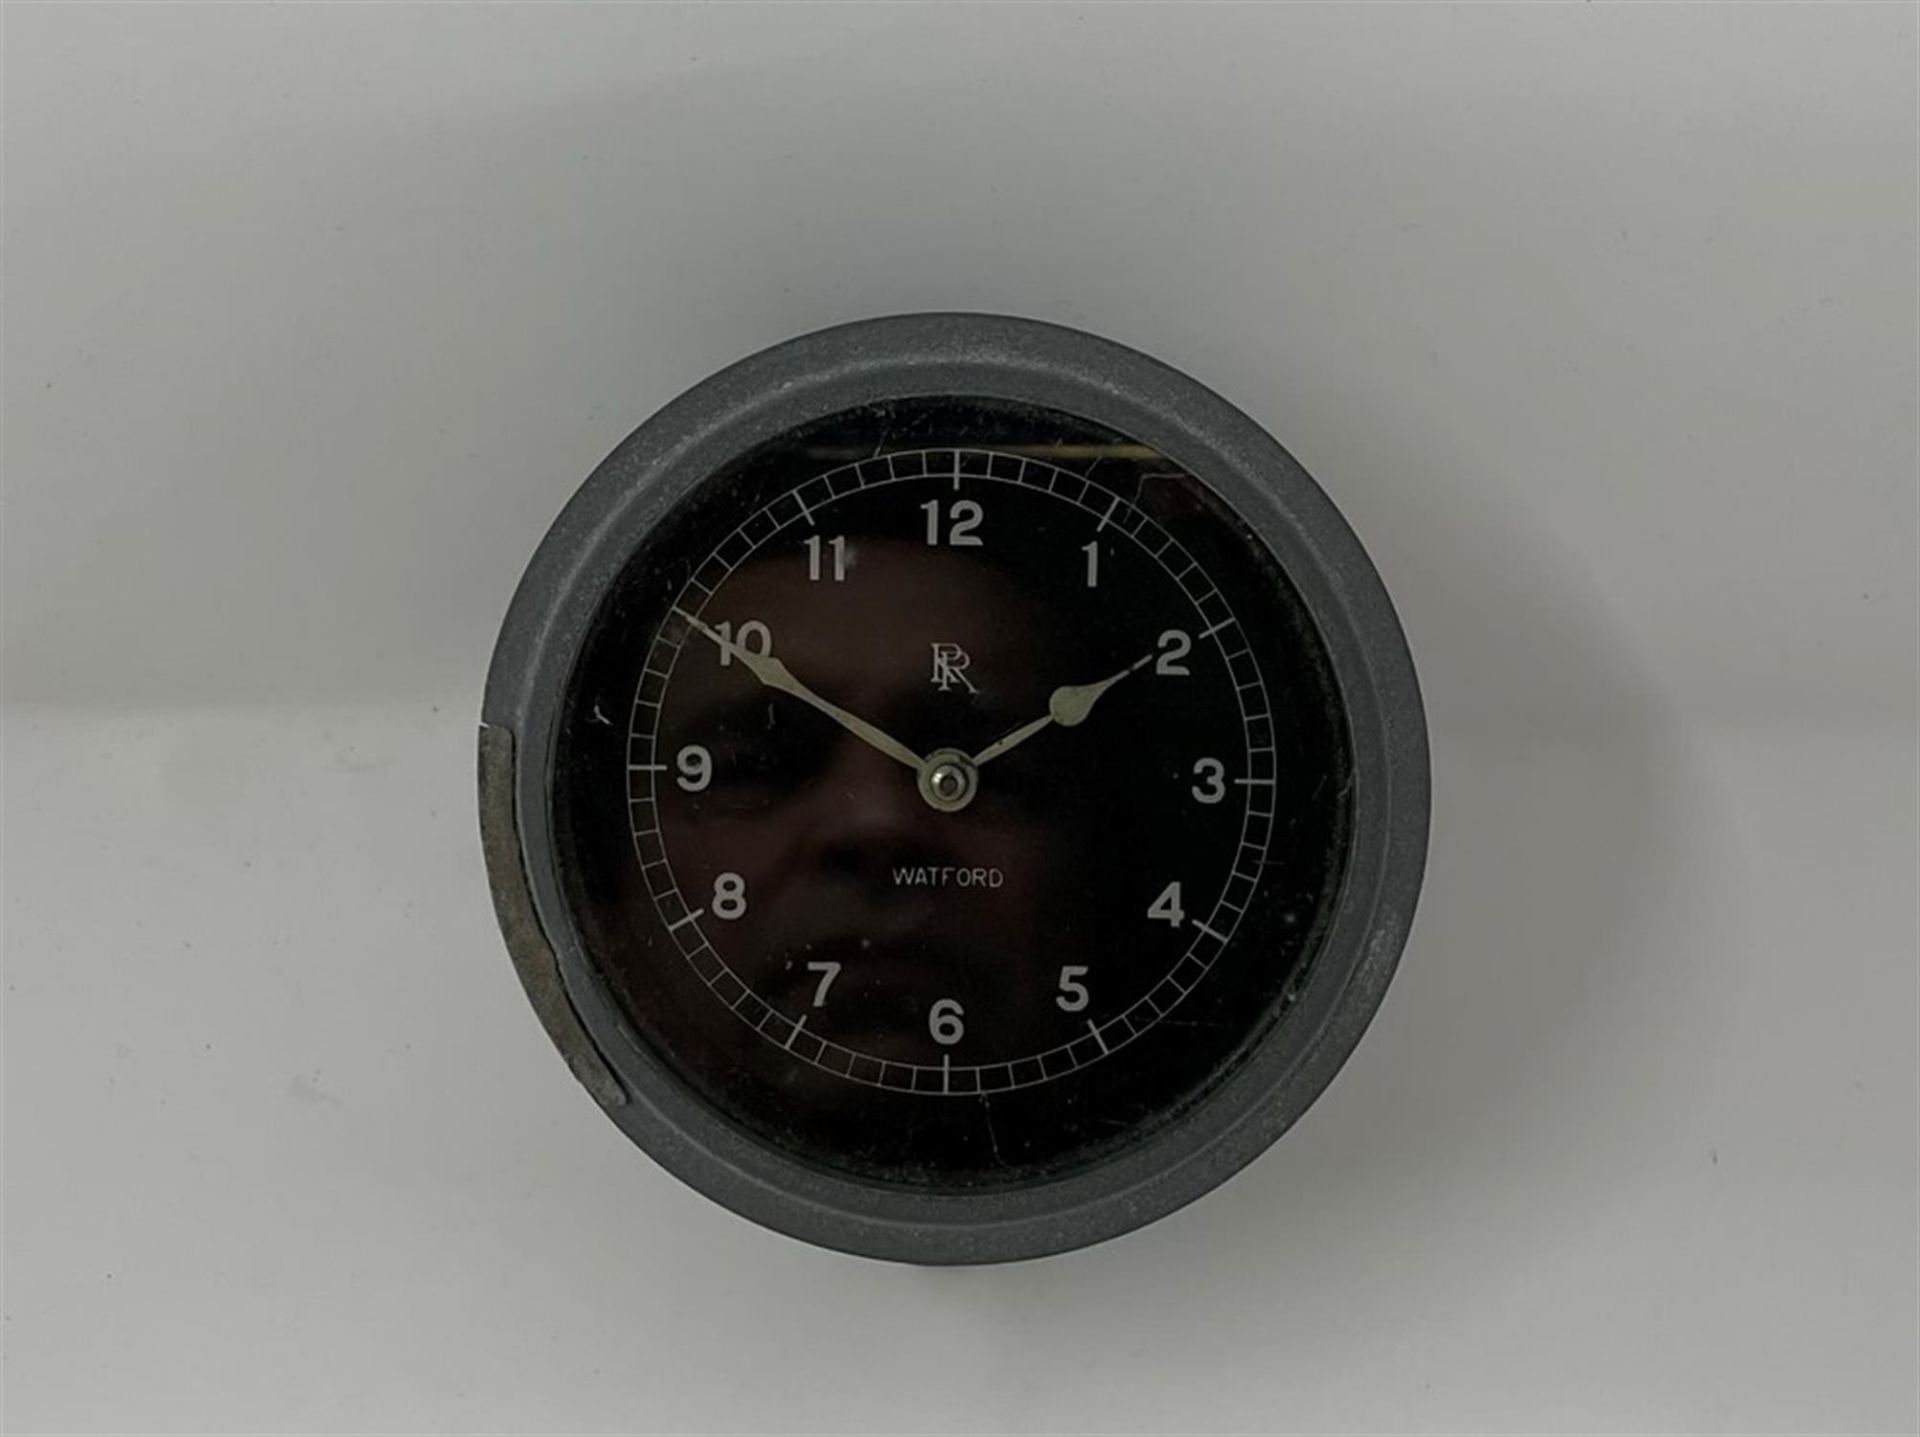 Rolls-Royce Watford Dashboard Clock c1920s - Image 2 of 7